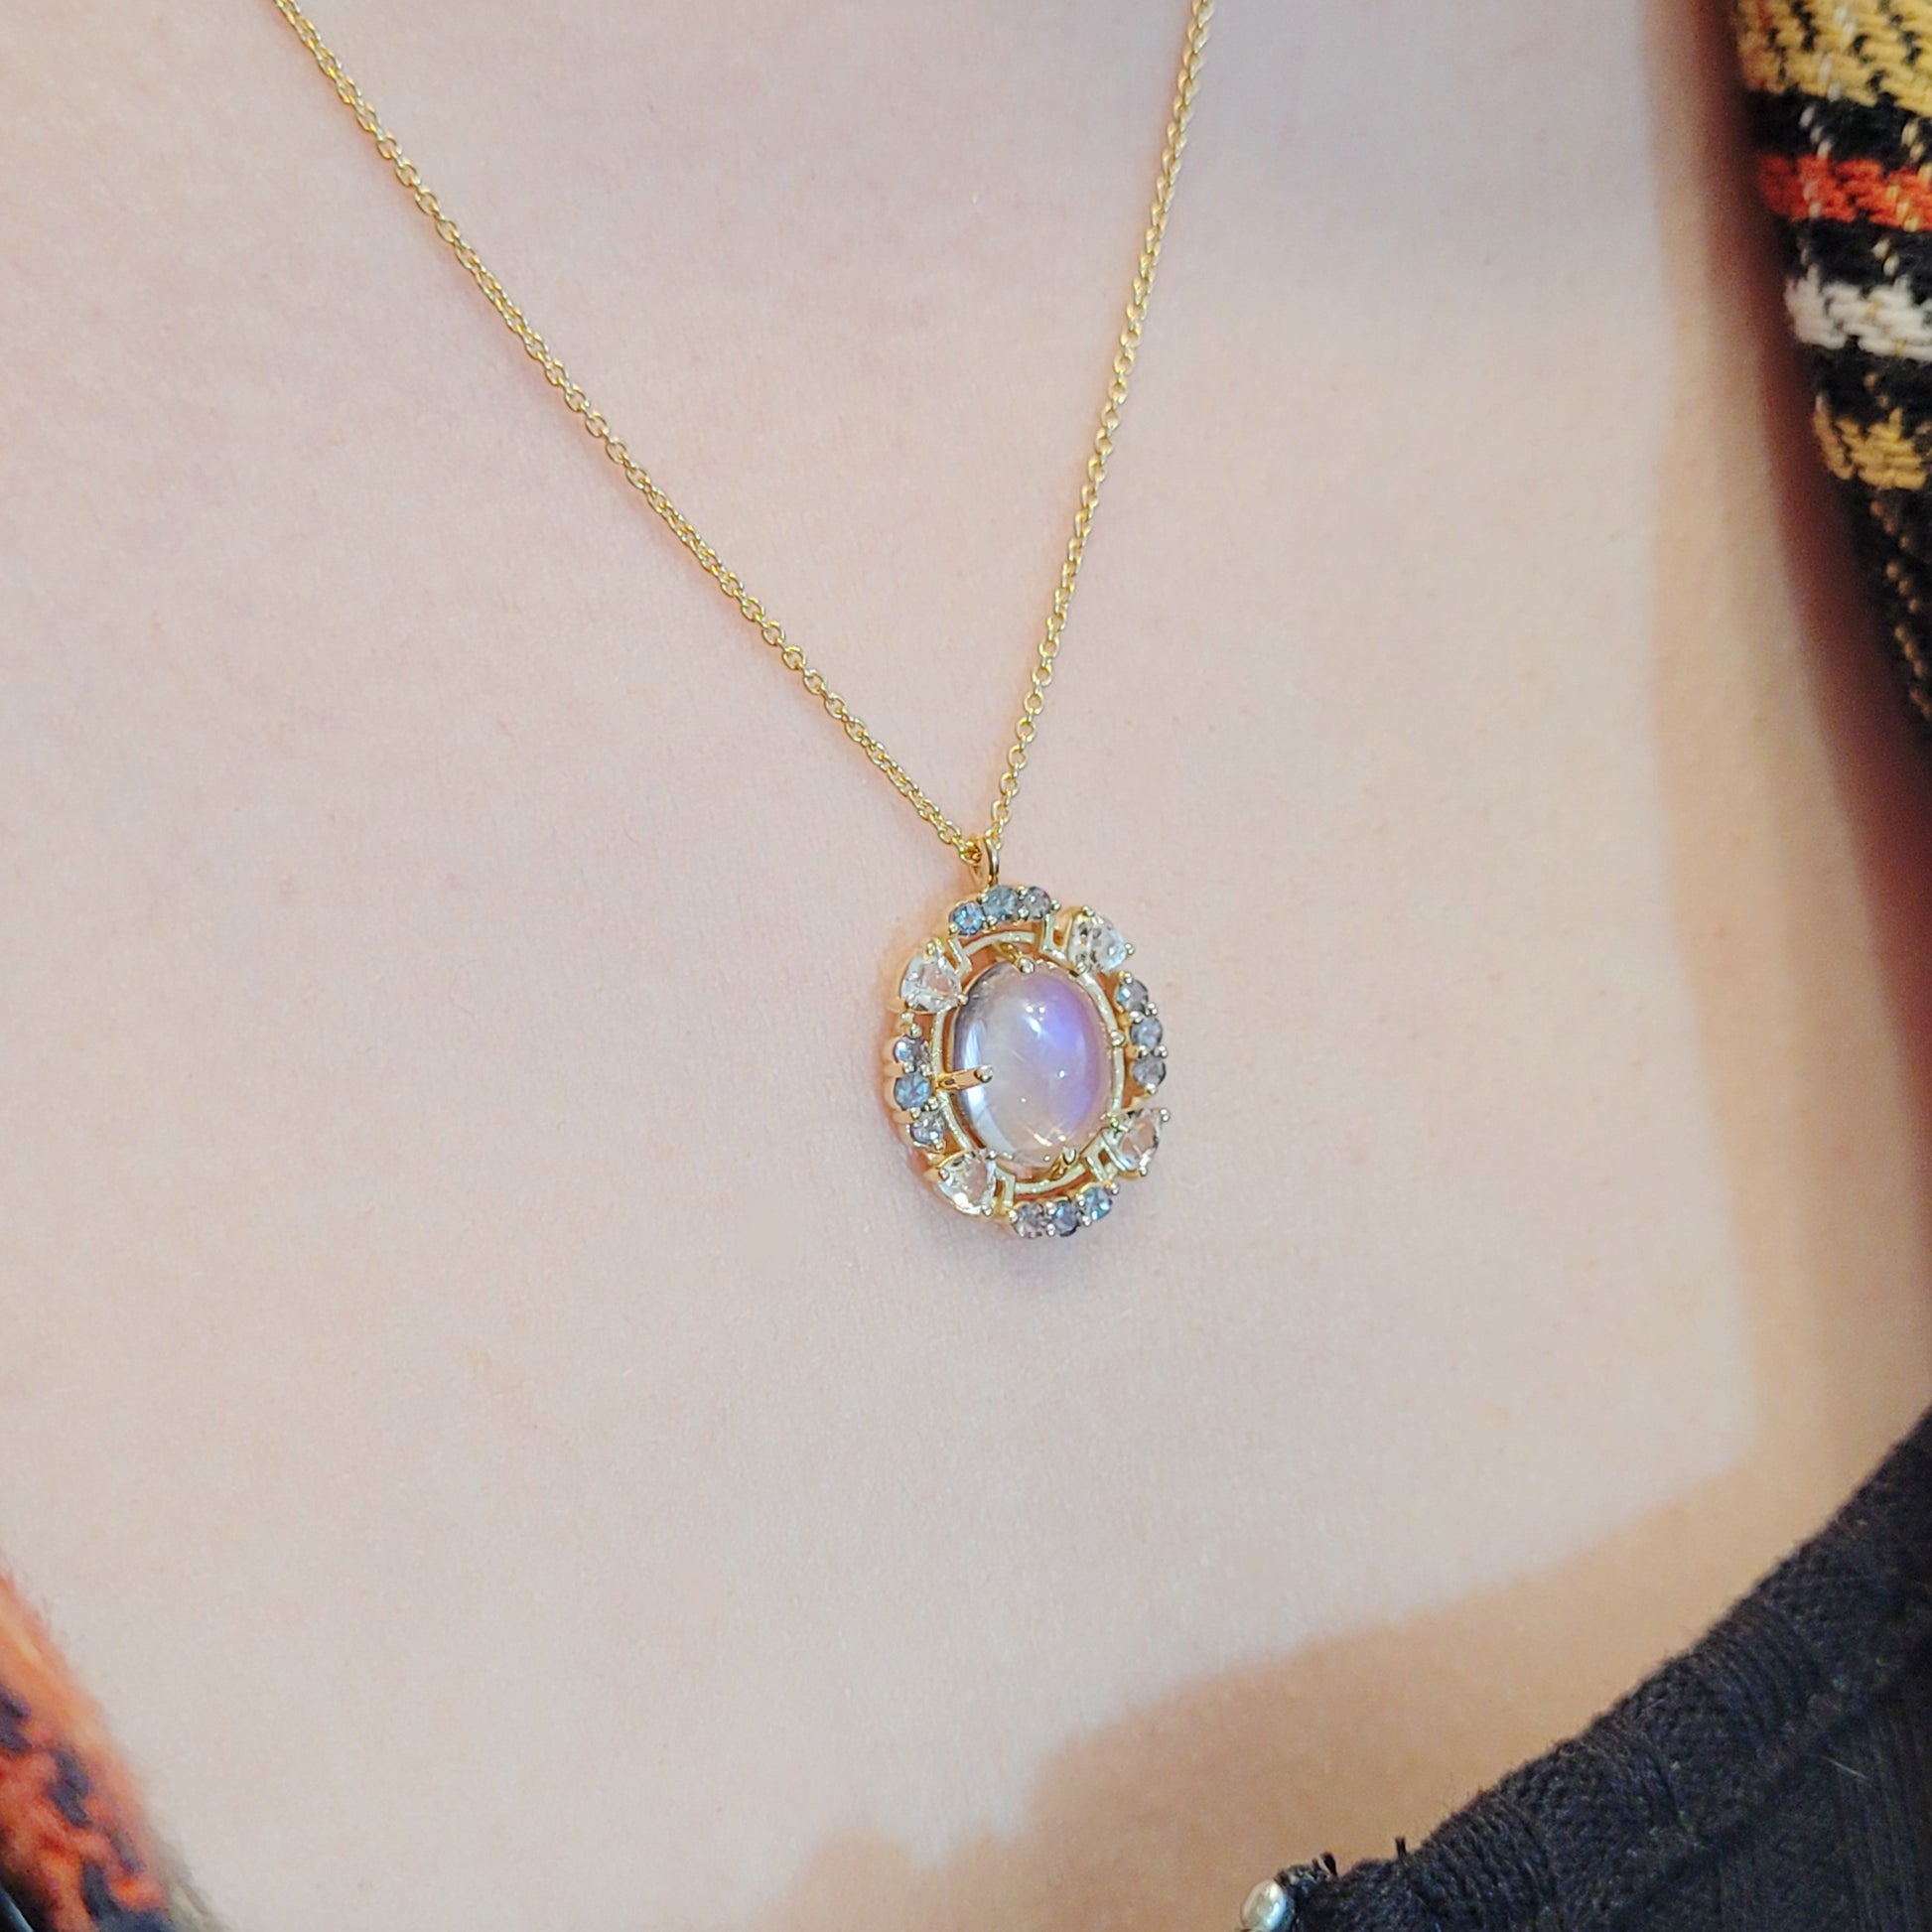 moonstone alexandrite pendant celestial jewelry custom necklace june birthstone gold gemstone birthday